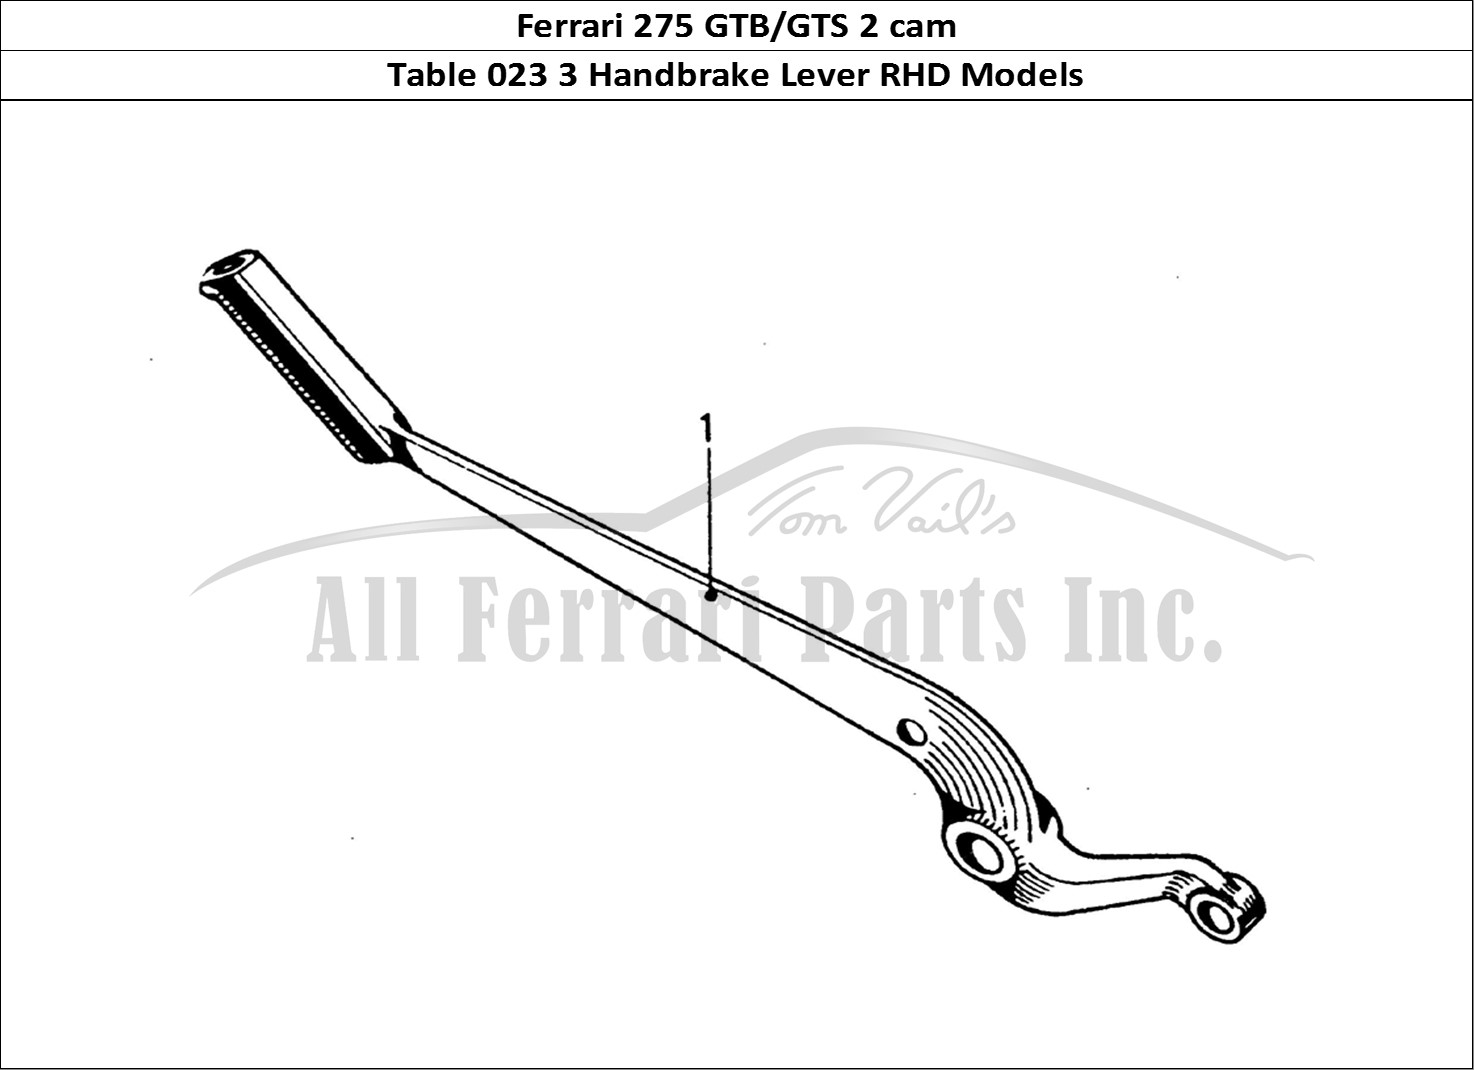 Ferrari Parts Ferrari 275 GTB/GTS 2 cam Page 023 Brake System- Right hand